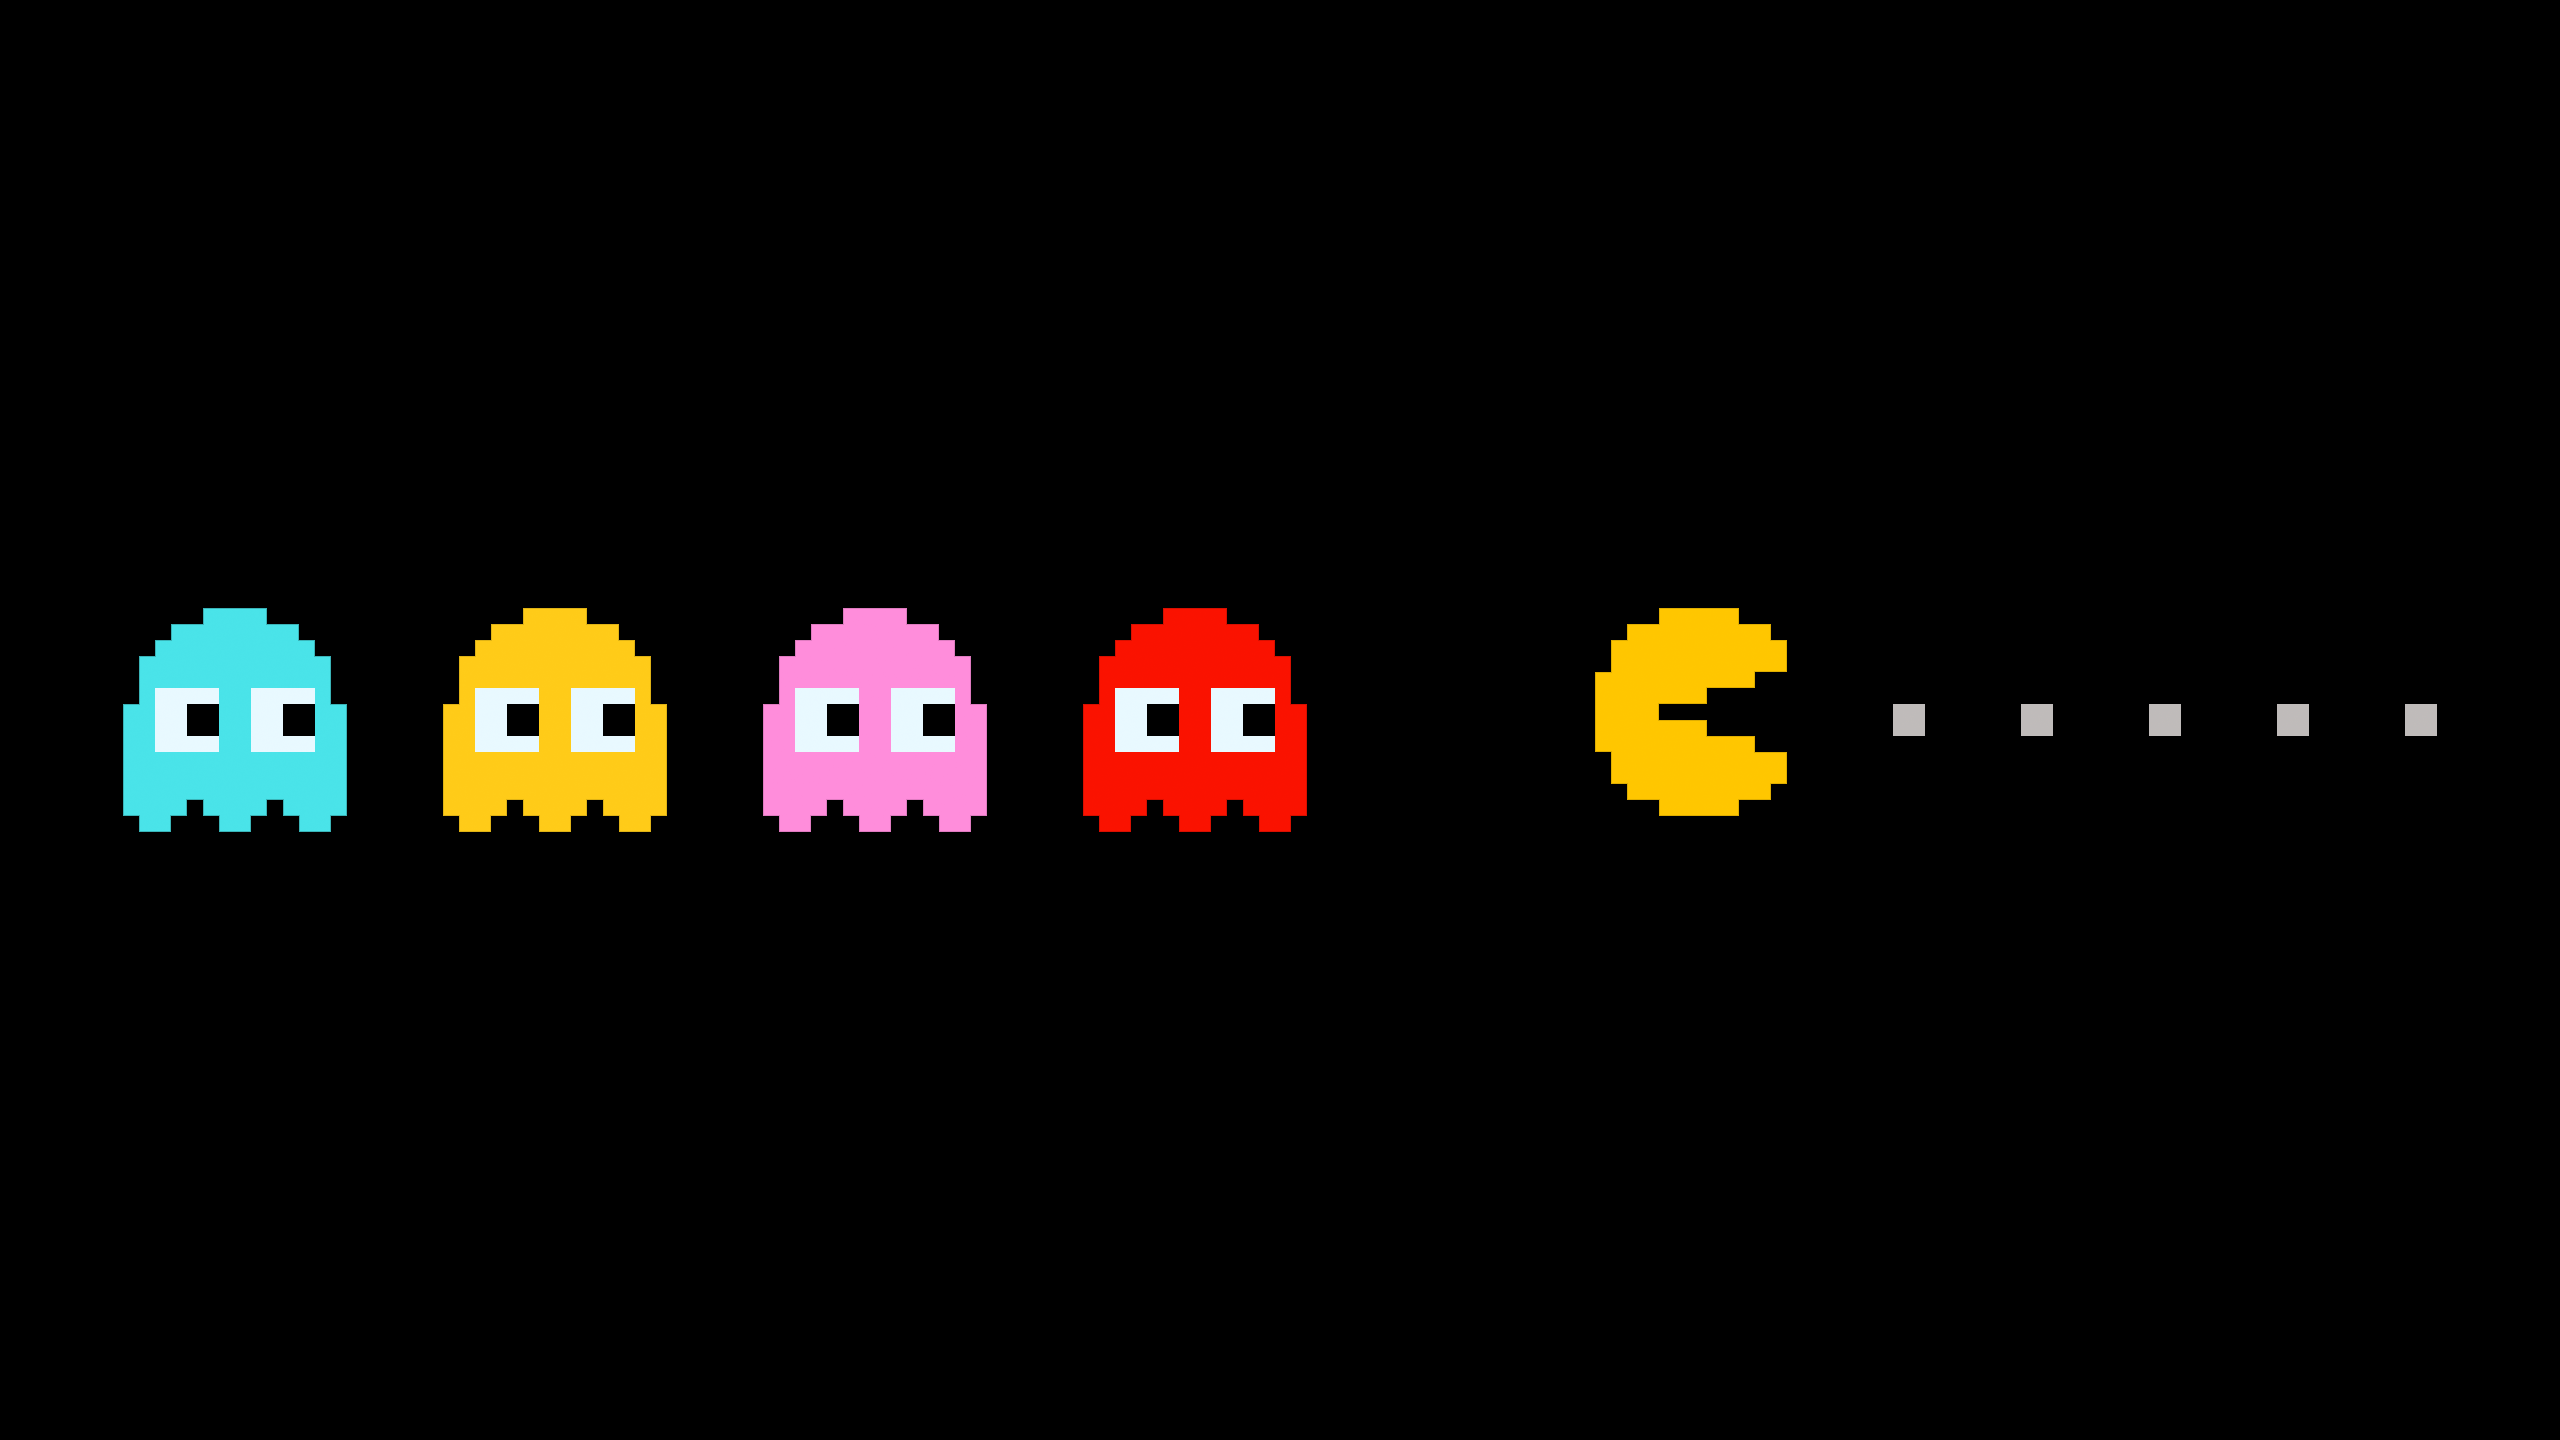 Pacman Wallpaper. Pacman Wallpaper